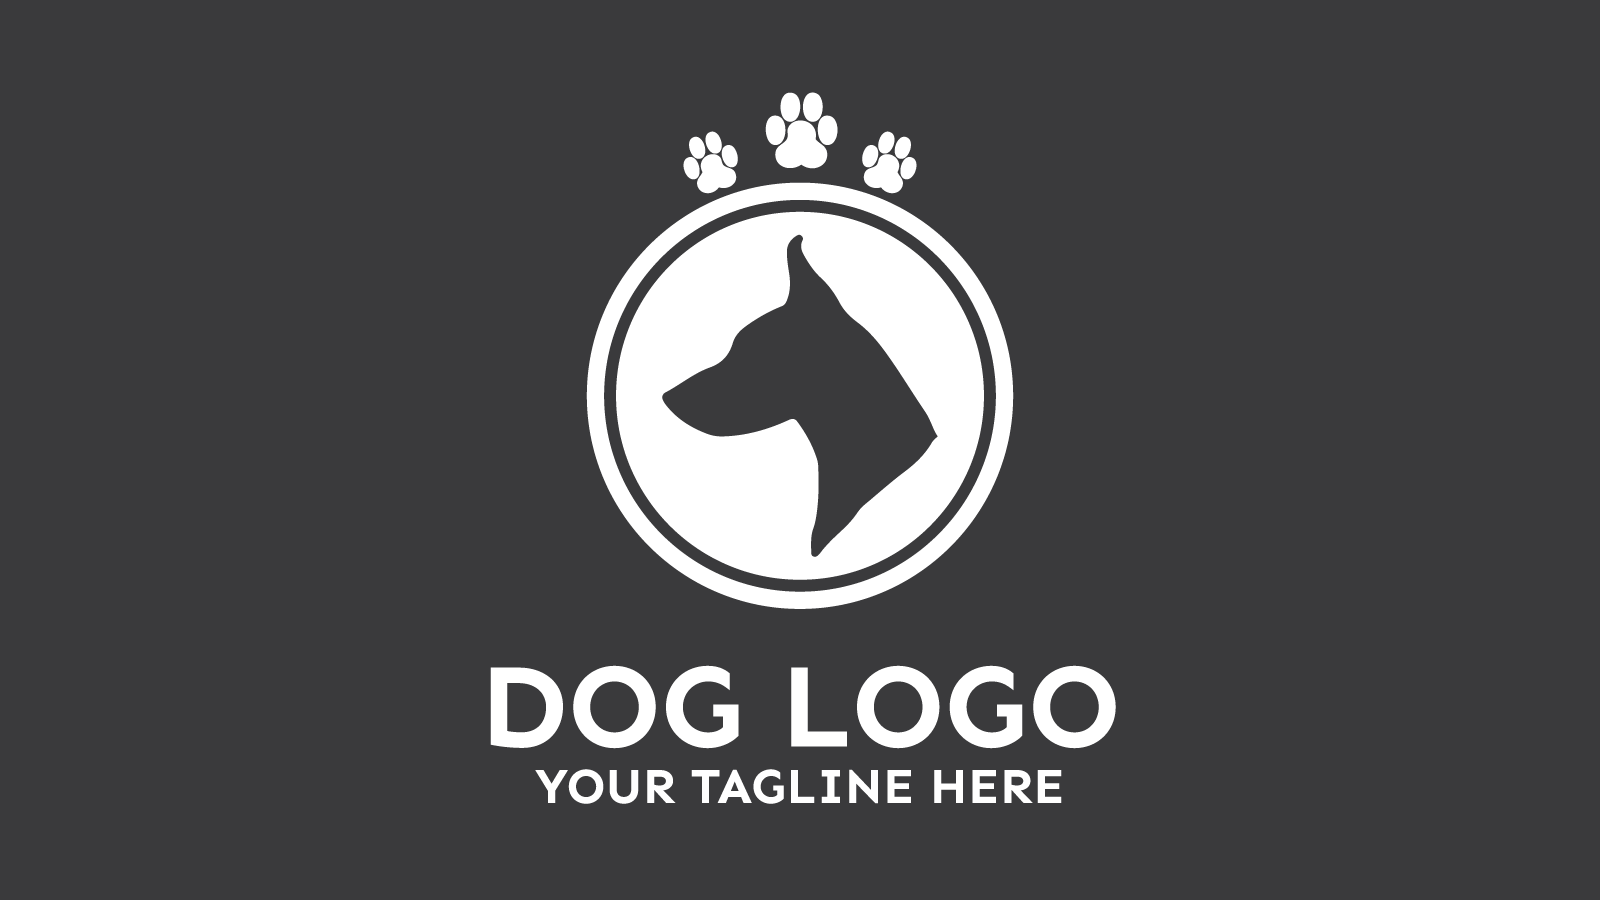 Логотип собаки. Логотип собака. Красивые логотипы с собаками. Щенок логотип. Дог лого.